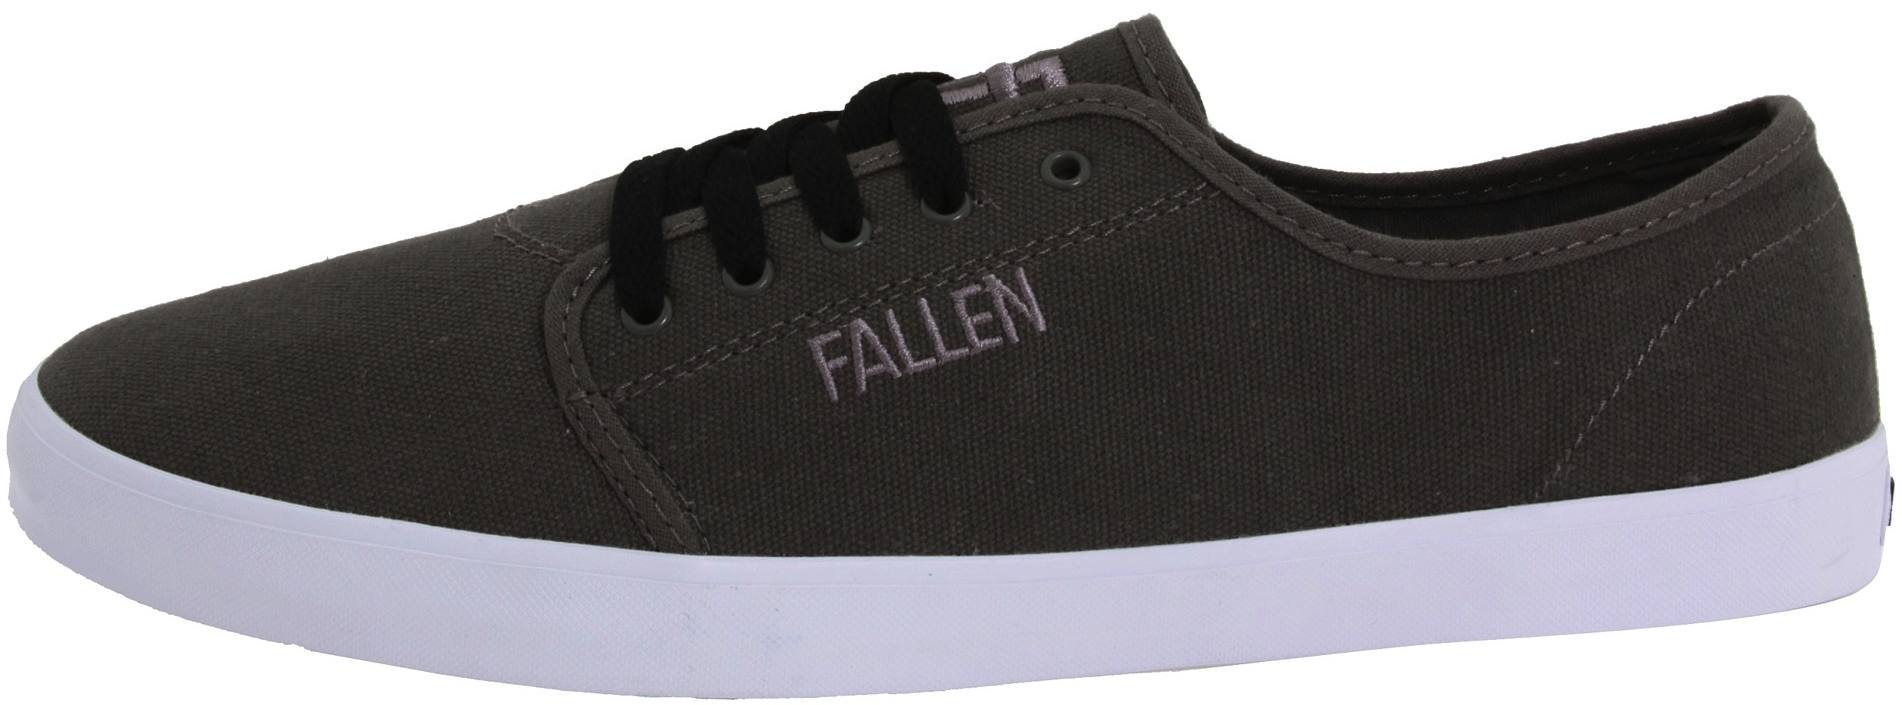 Fallen Daze Vegan skateboard shoes